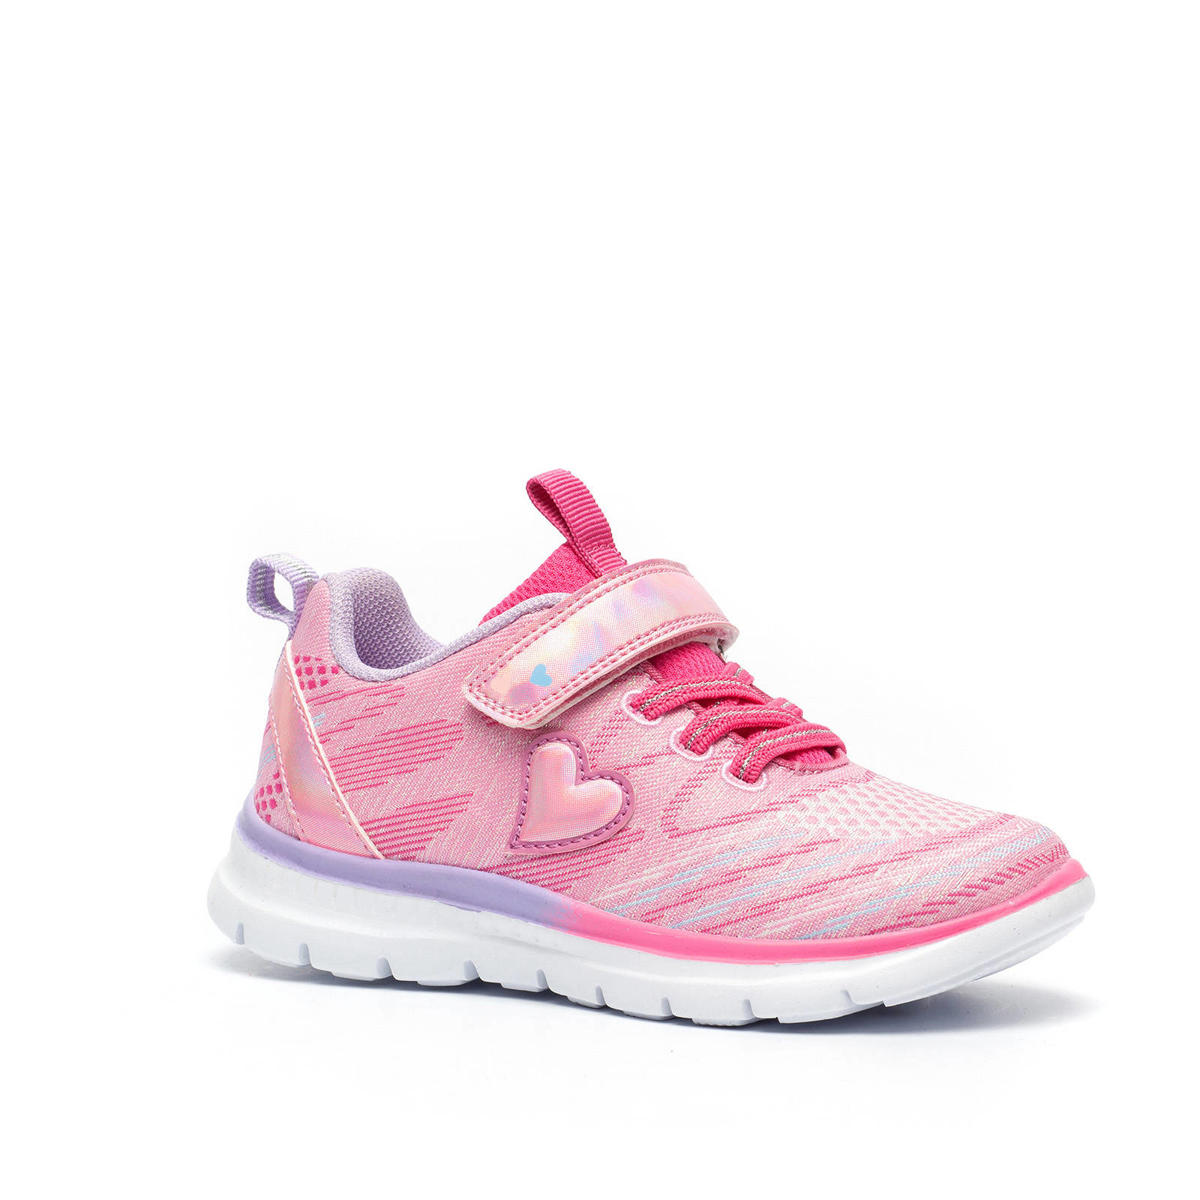 Box sneakers roze | wehkamp